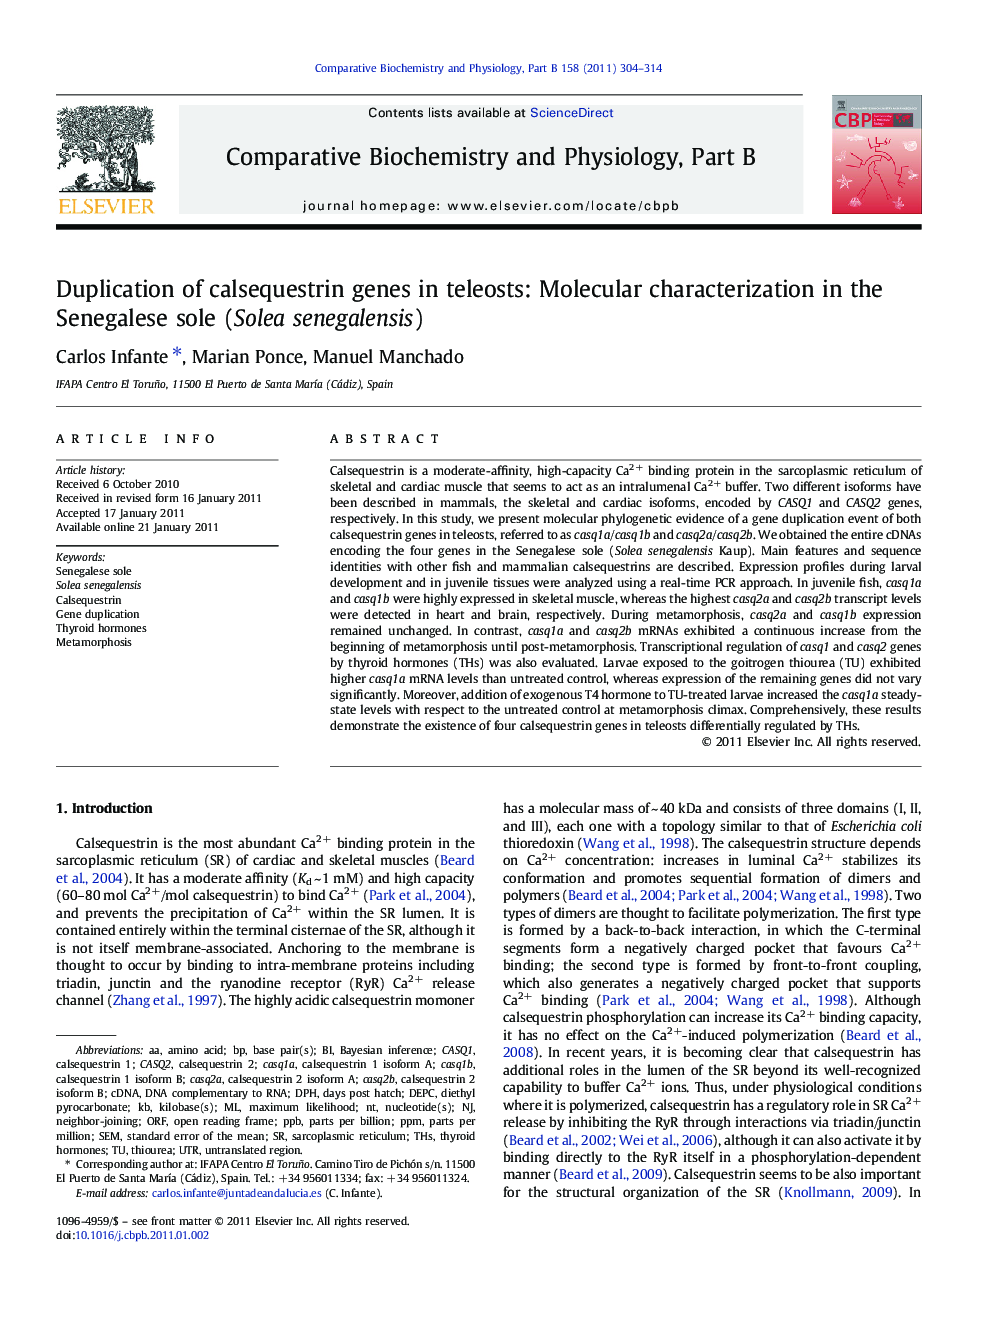 Duplication of calsequestrin genes in teleosts: Molecular characterization in the Senegalese sole (Solea senegalensis)